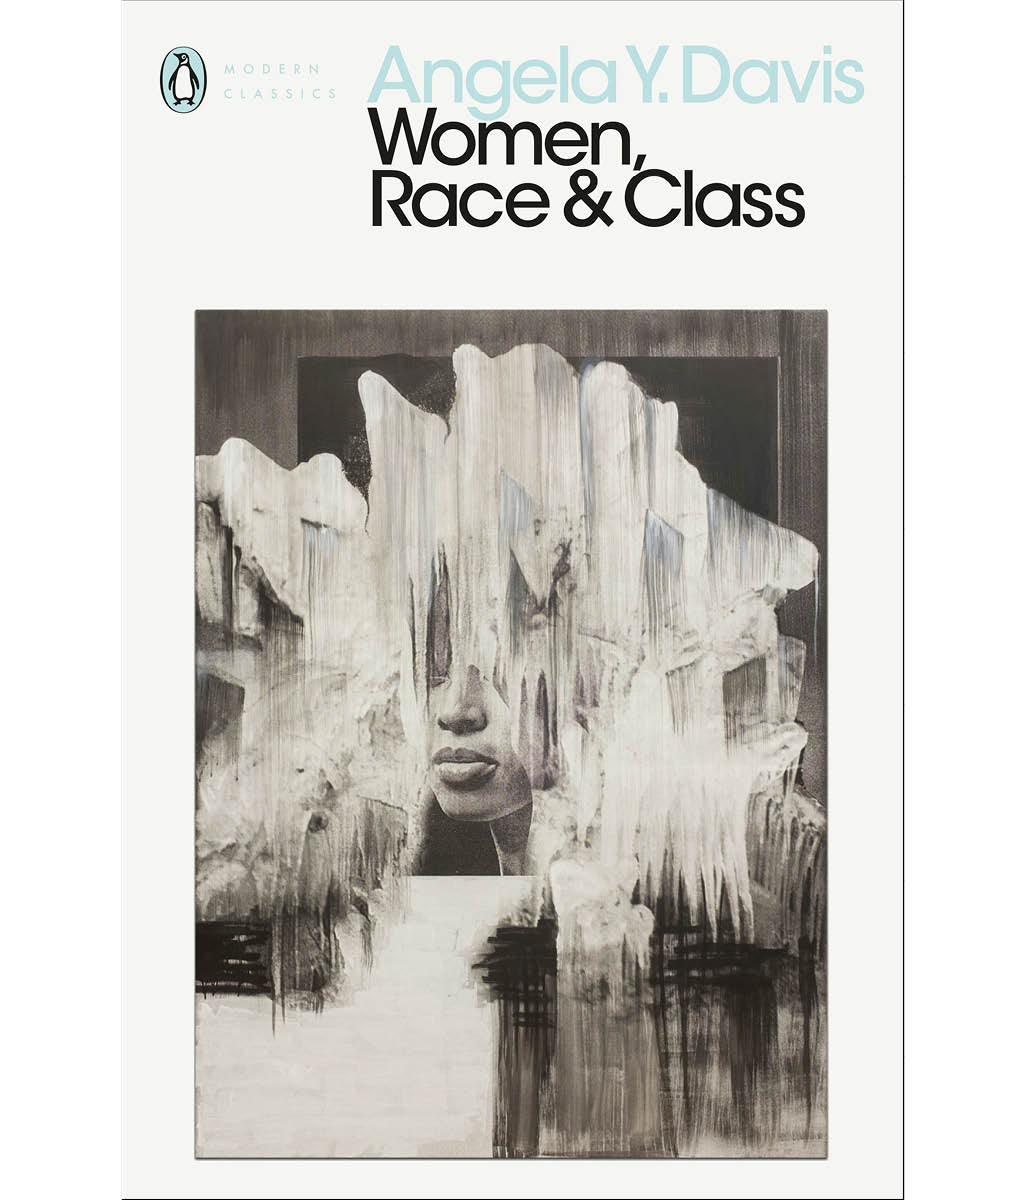 Women, race & class by Angela Davis